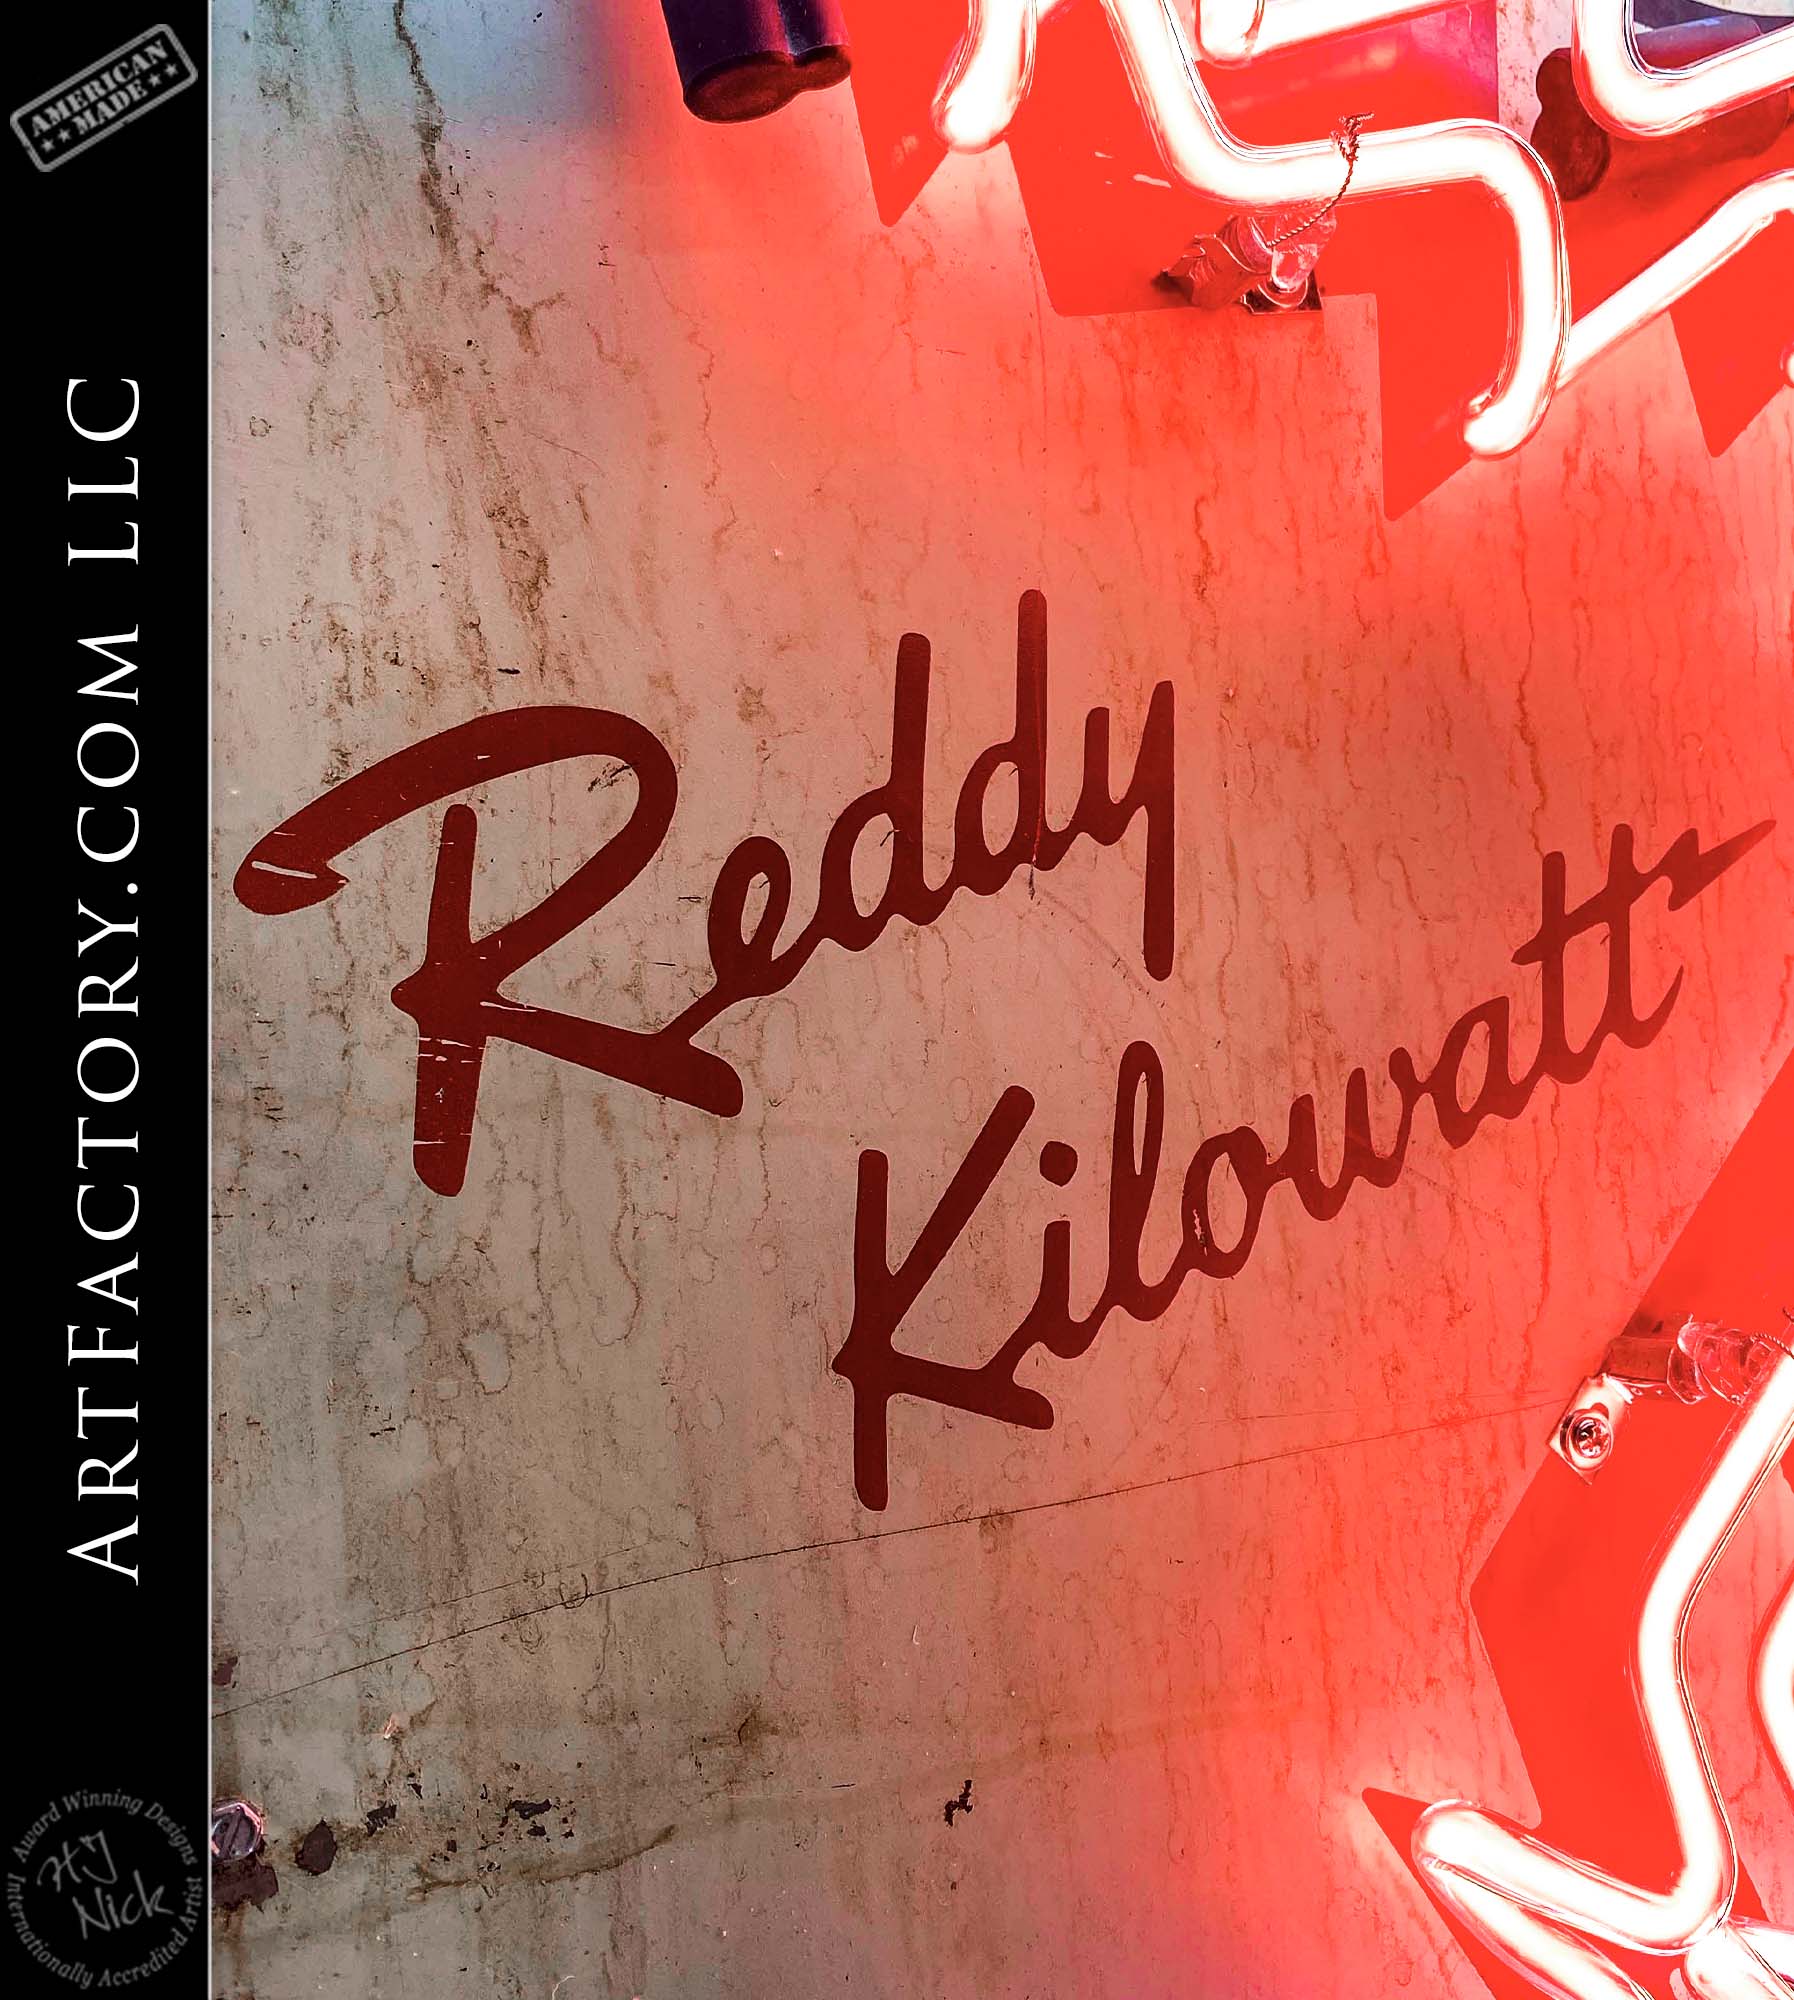 Reddy Kilowatt Neon Sign: Rare Vintage Ohio Power And Light Company